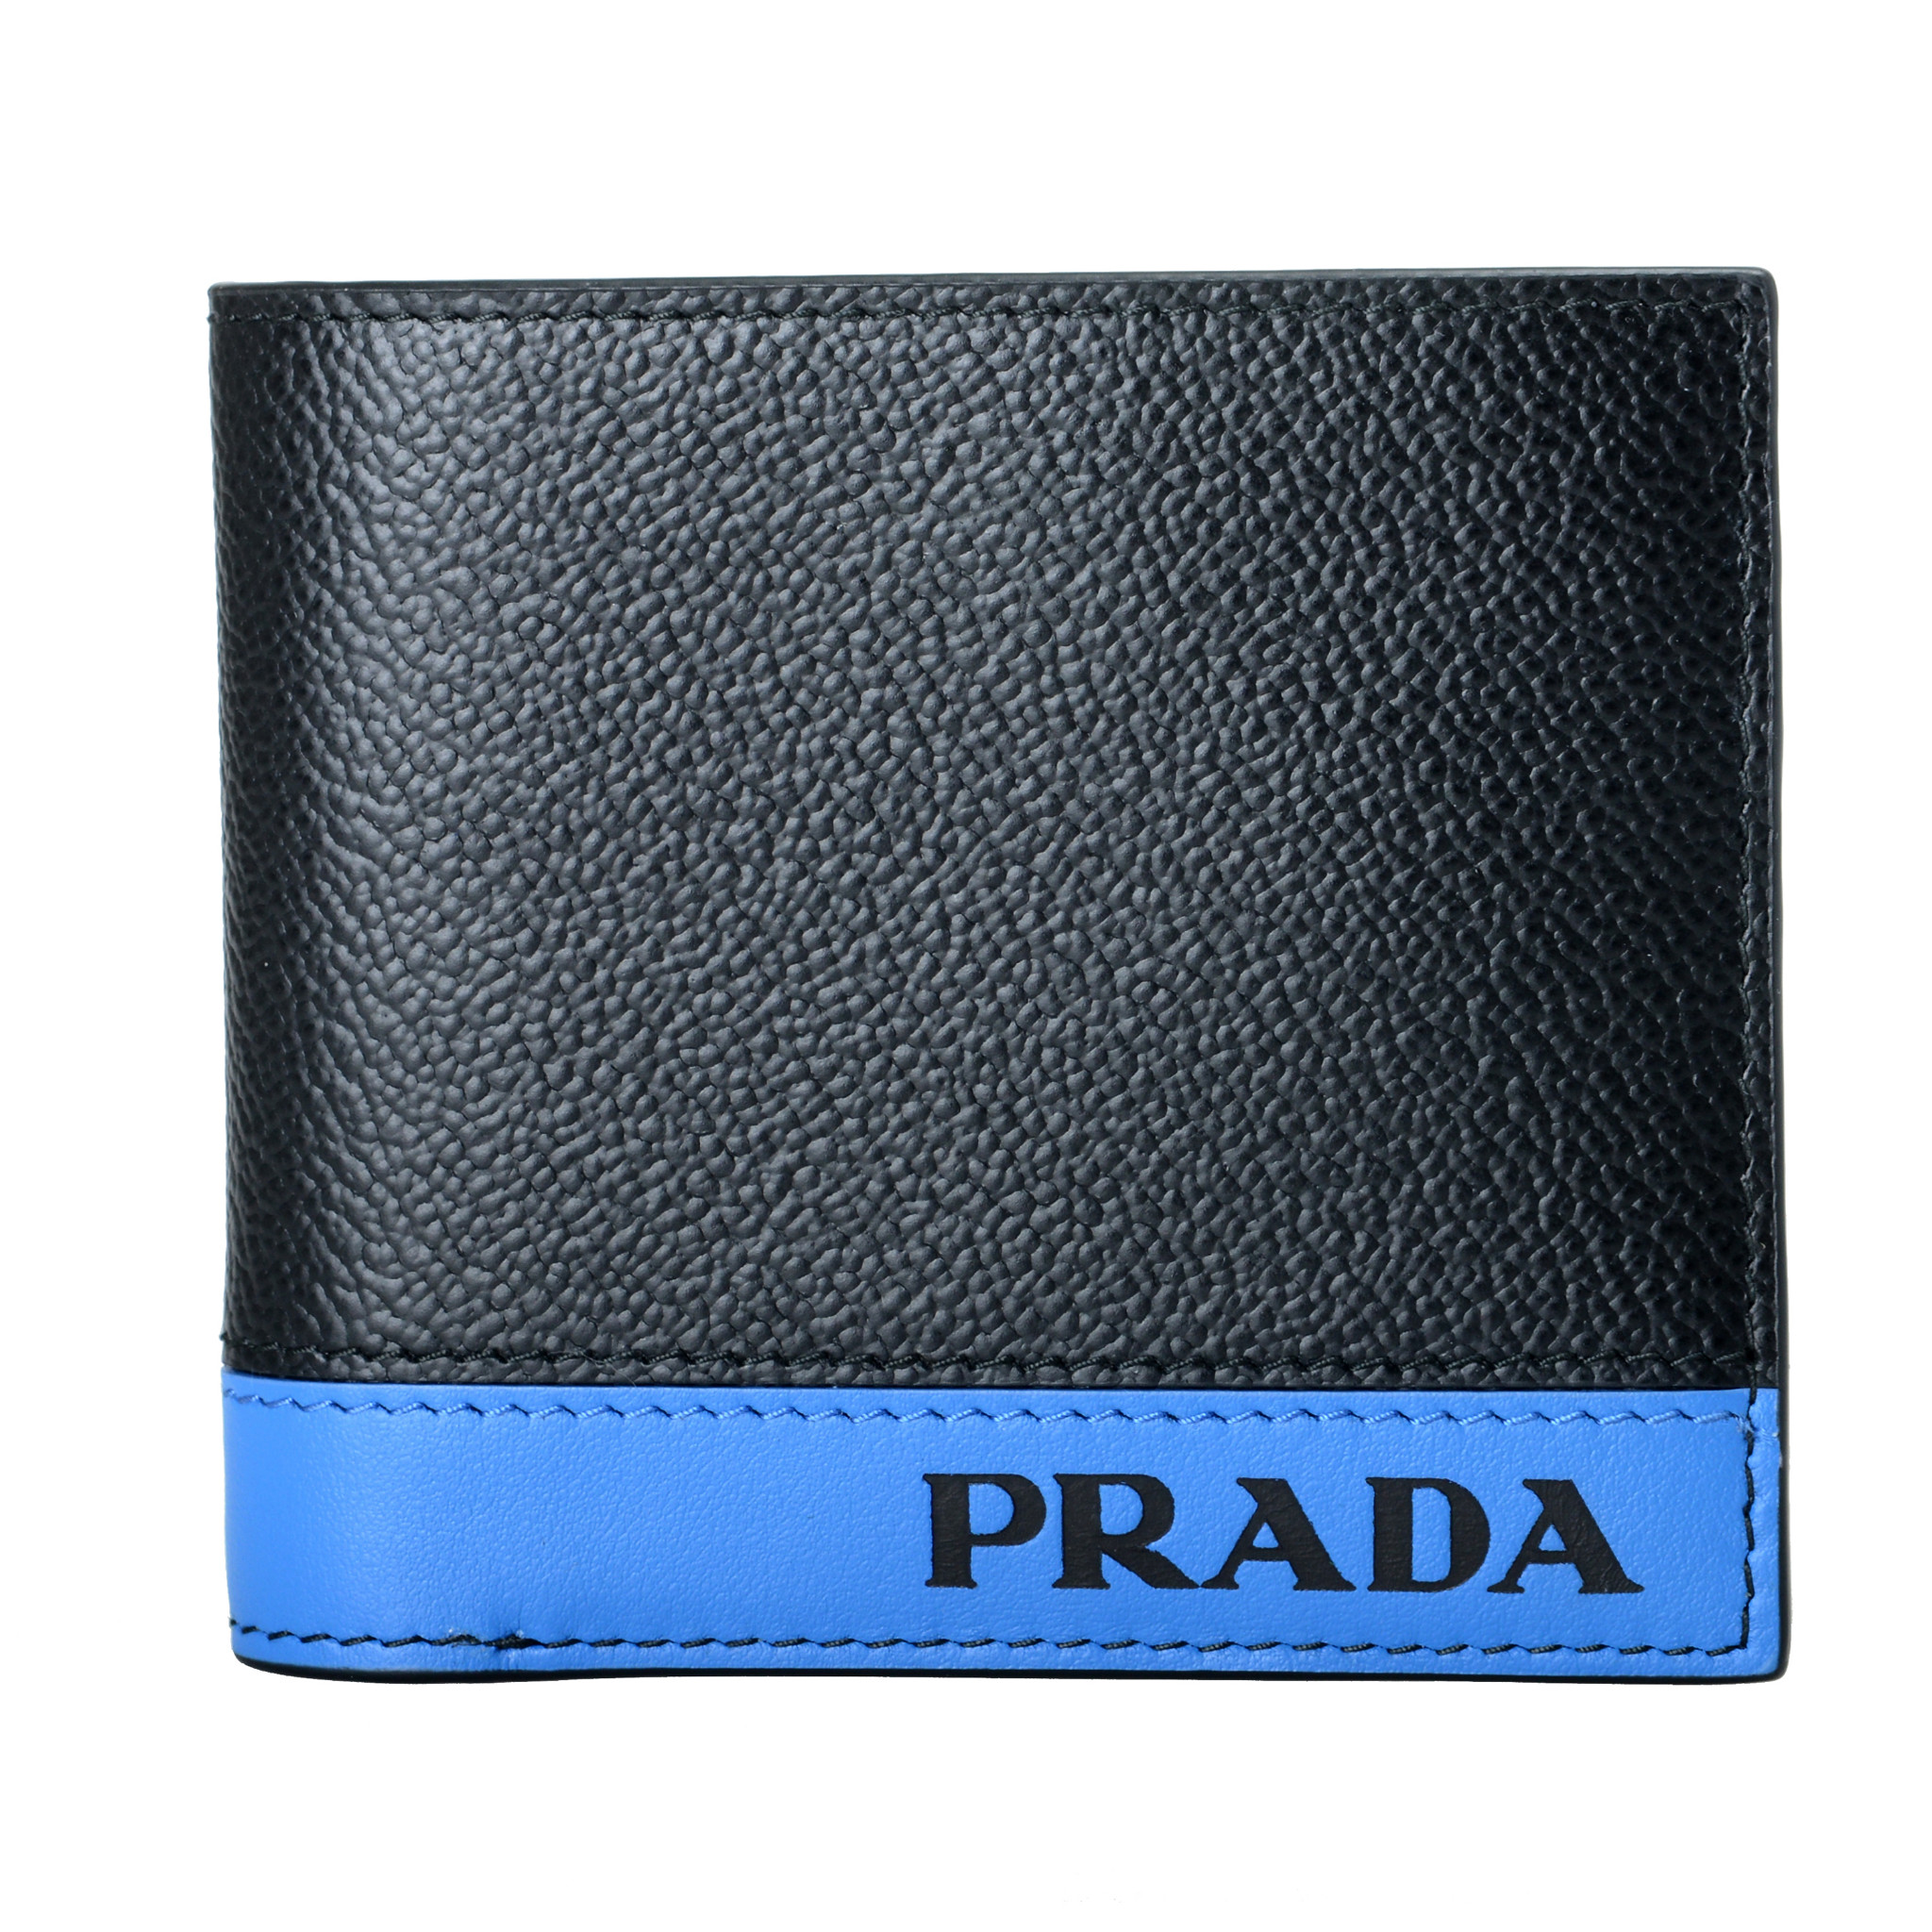 Prada Men's Textured Leather Black Bifold Wallet 8059227229406 | eBay